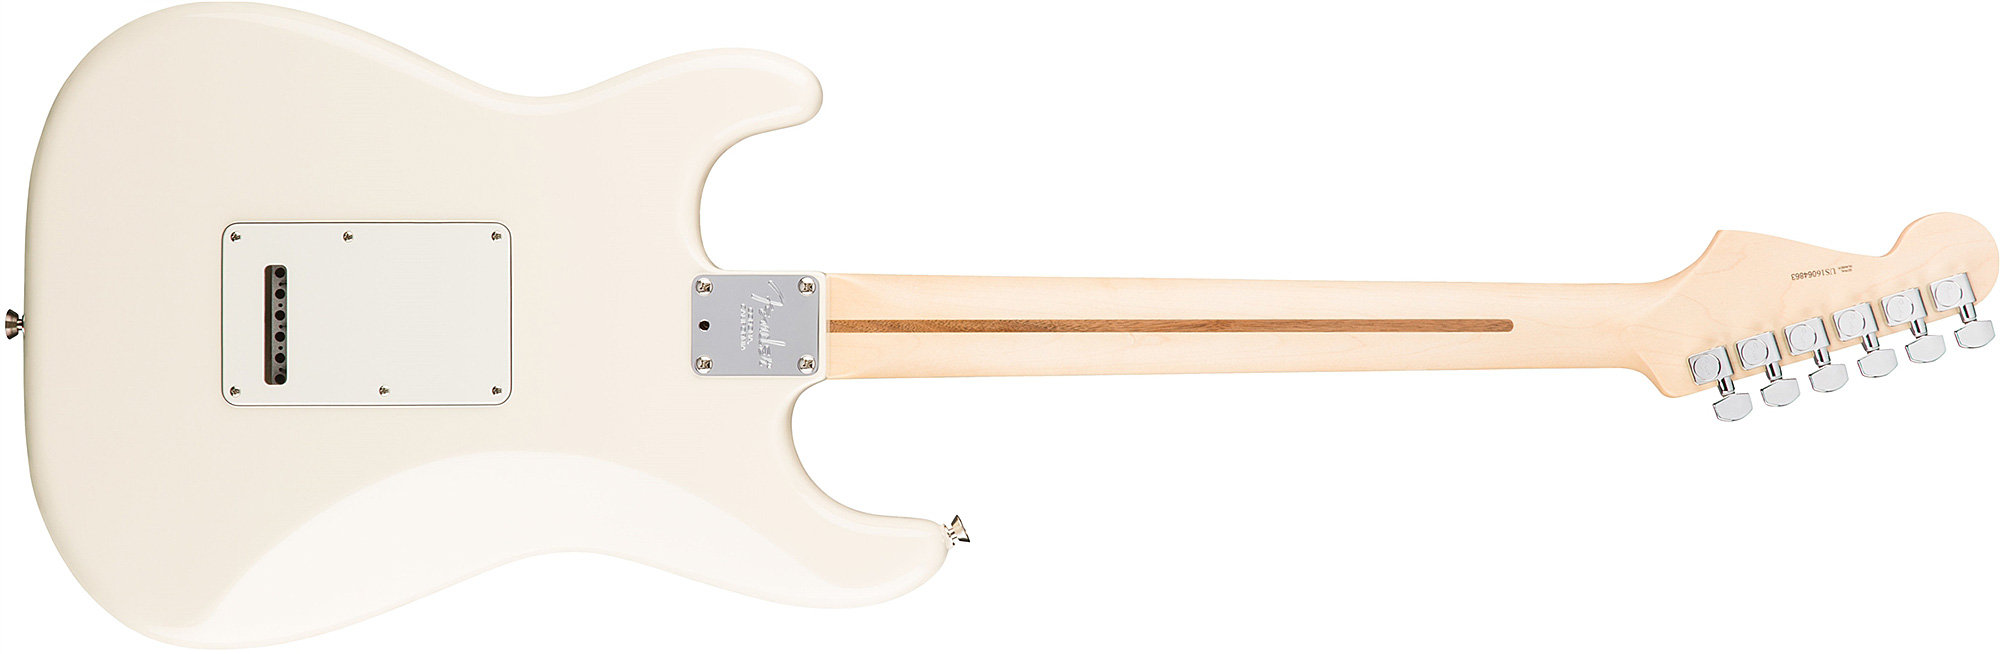 Fender Strat American Professional 2017 3s Usa Rw - Olympic White - E-Gitarre in Str-Form - Variation 1